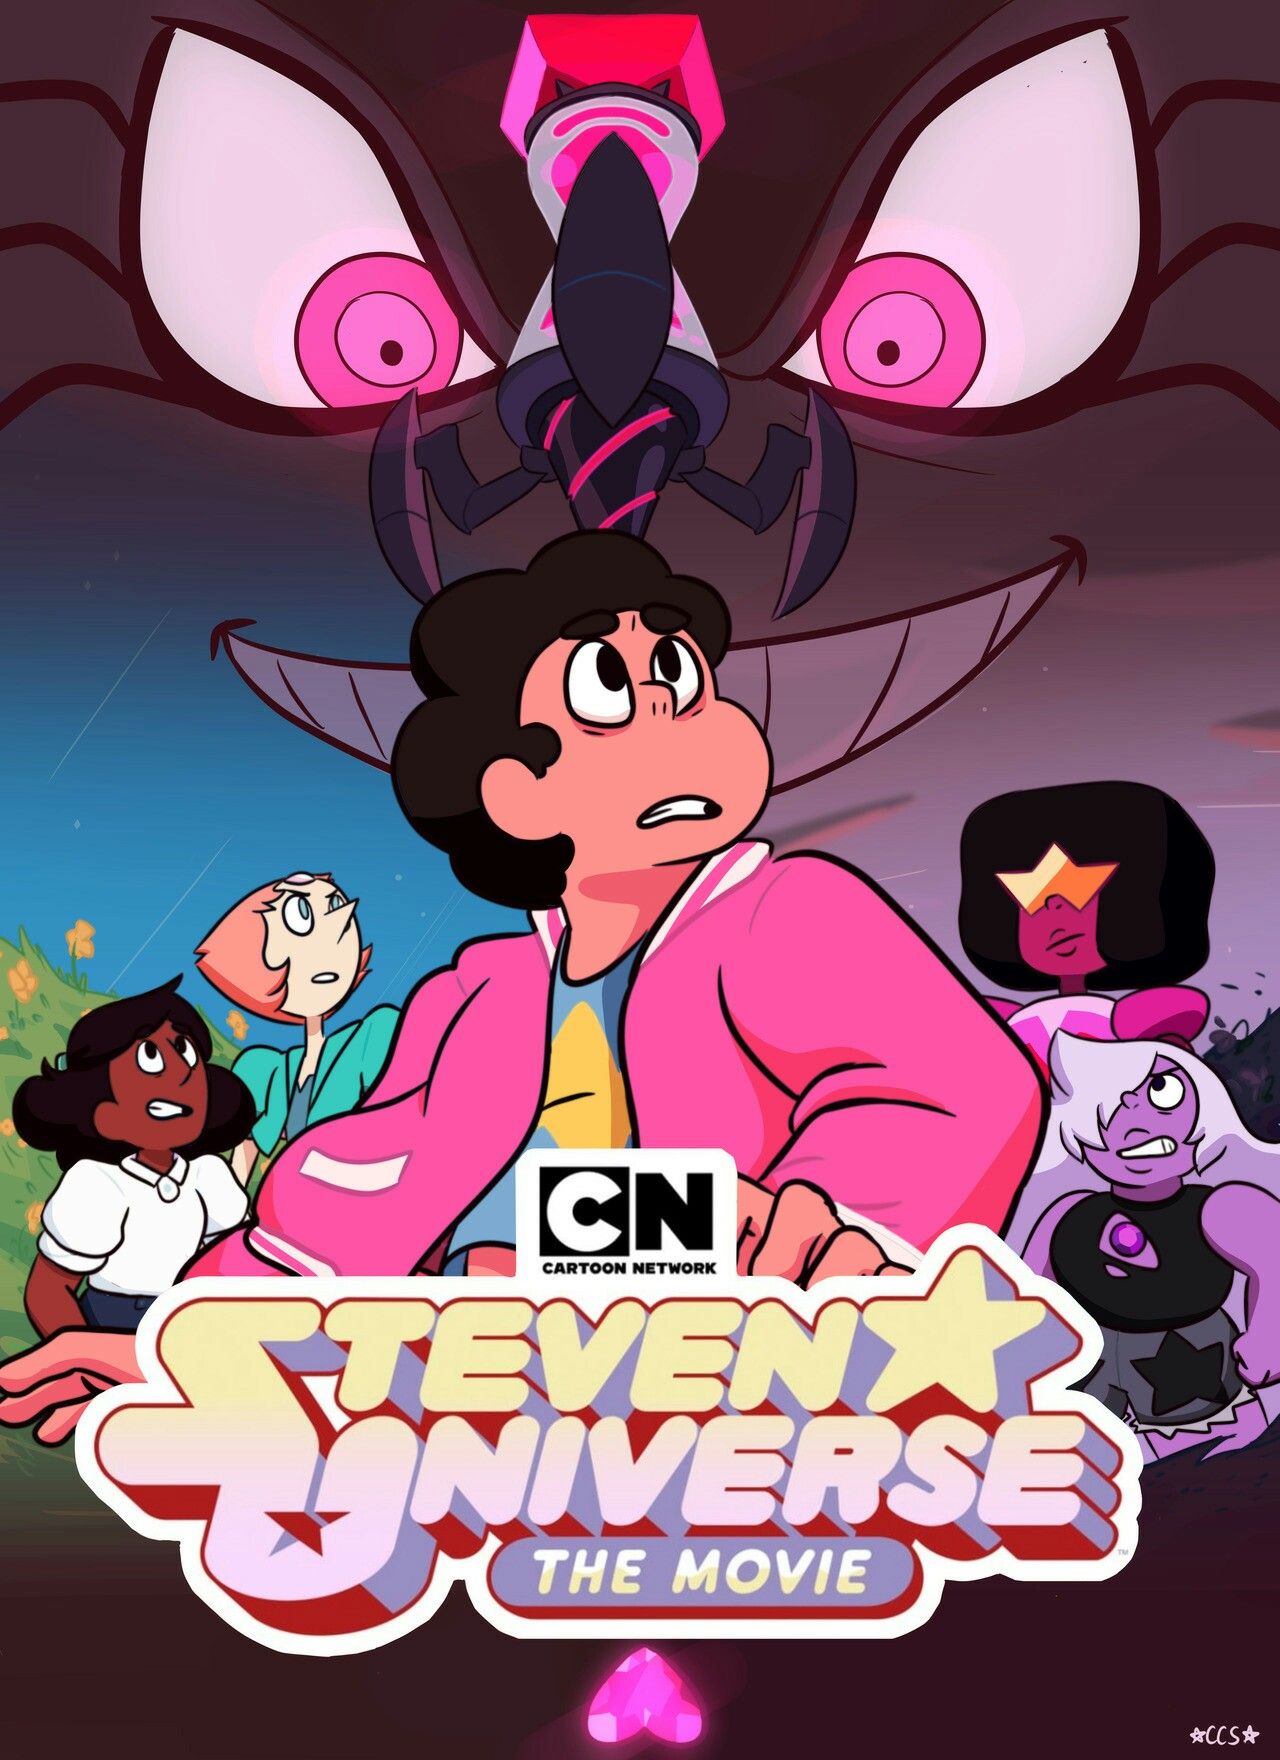 Steven Universe: A film online